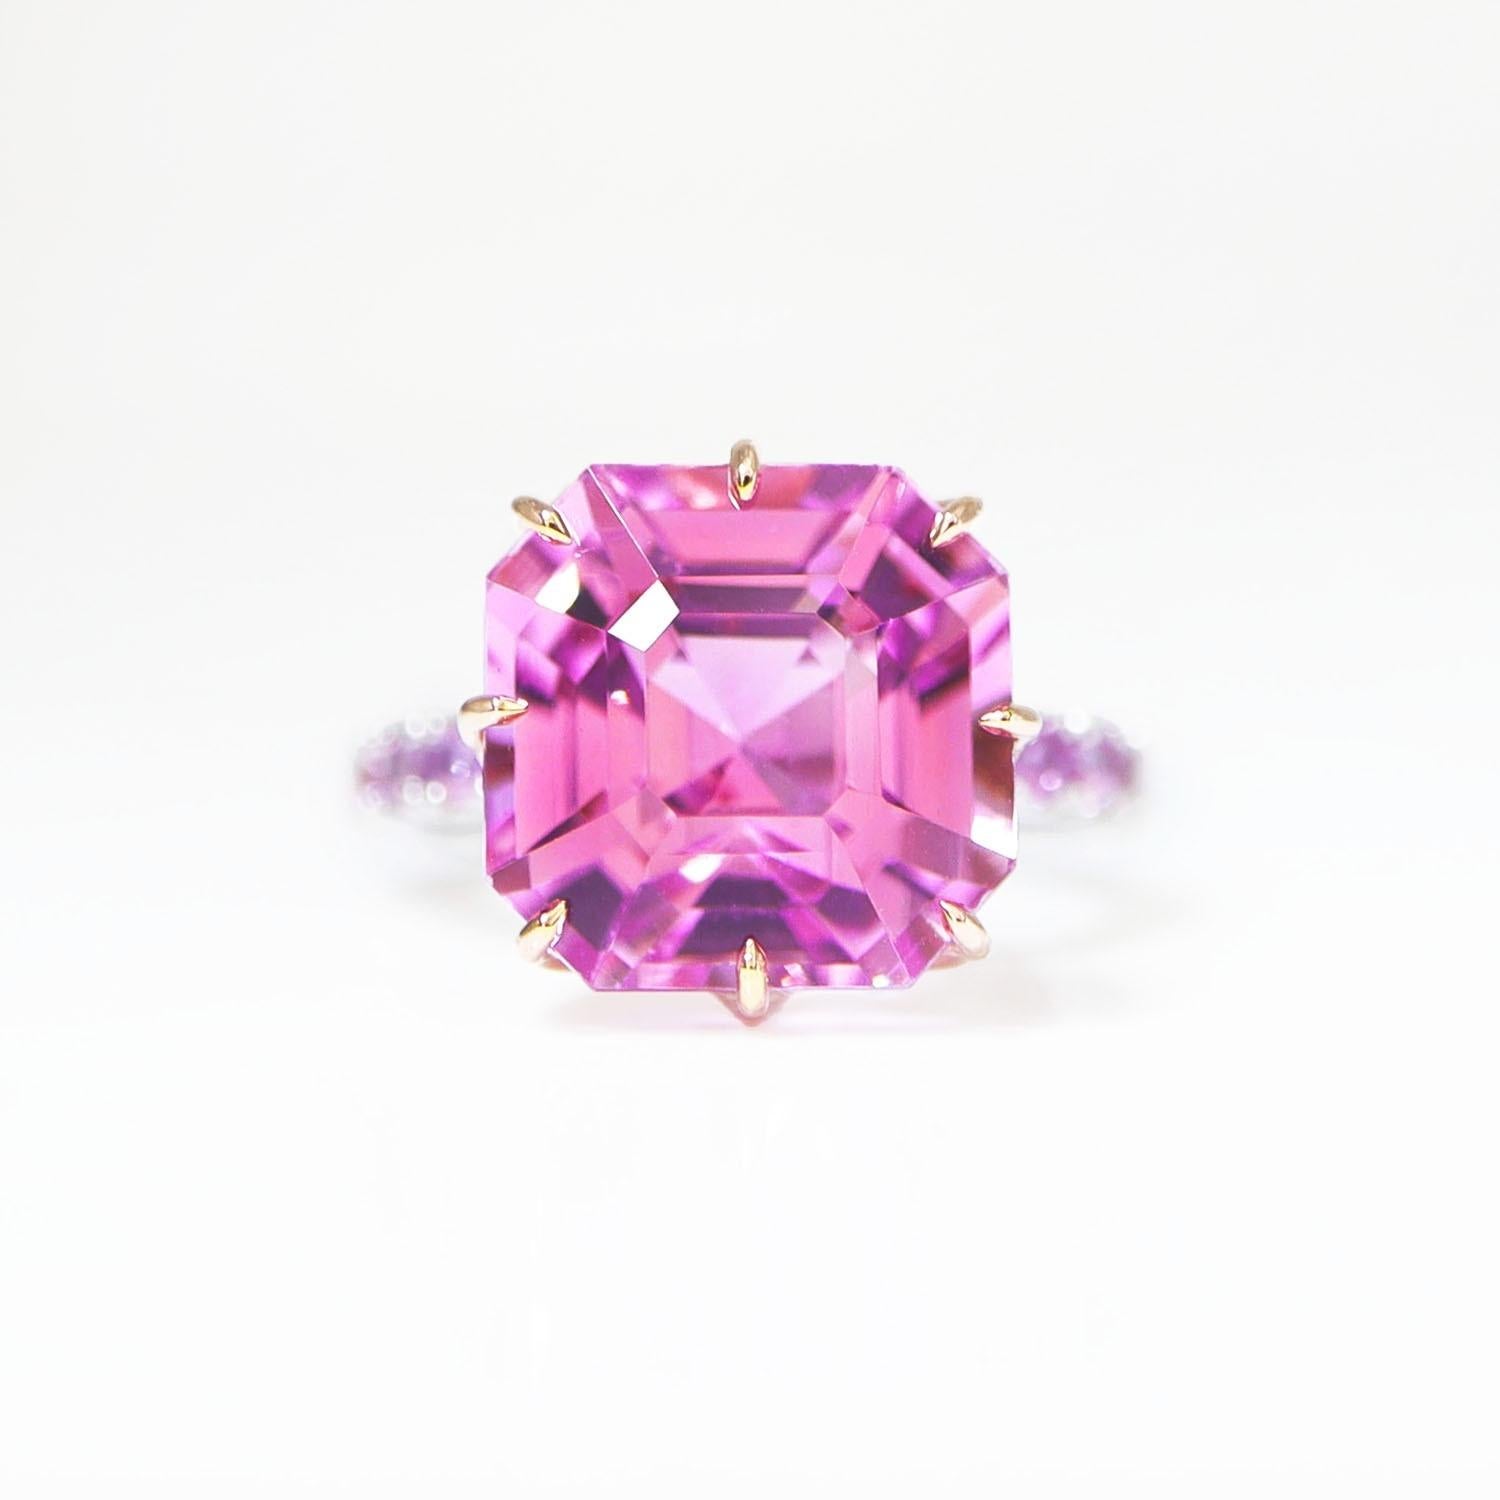 Emerald Cut IGI 14K 14.45 Ct Kunzite&Pink Sapphires Antique Art Deco Style Engagement Ring